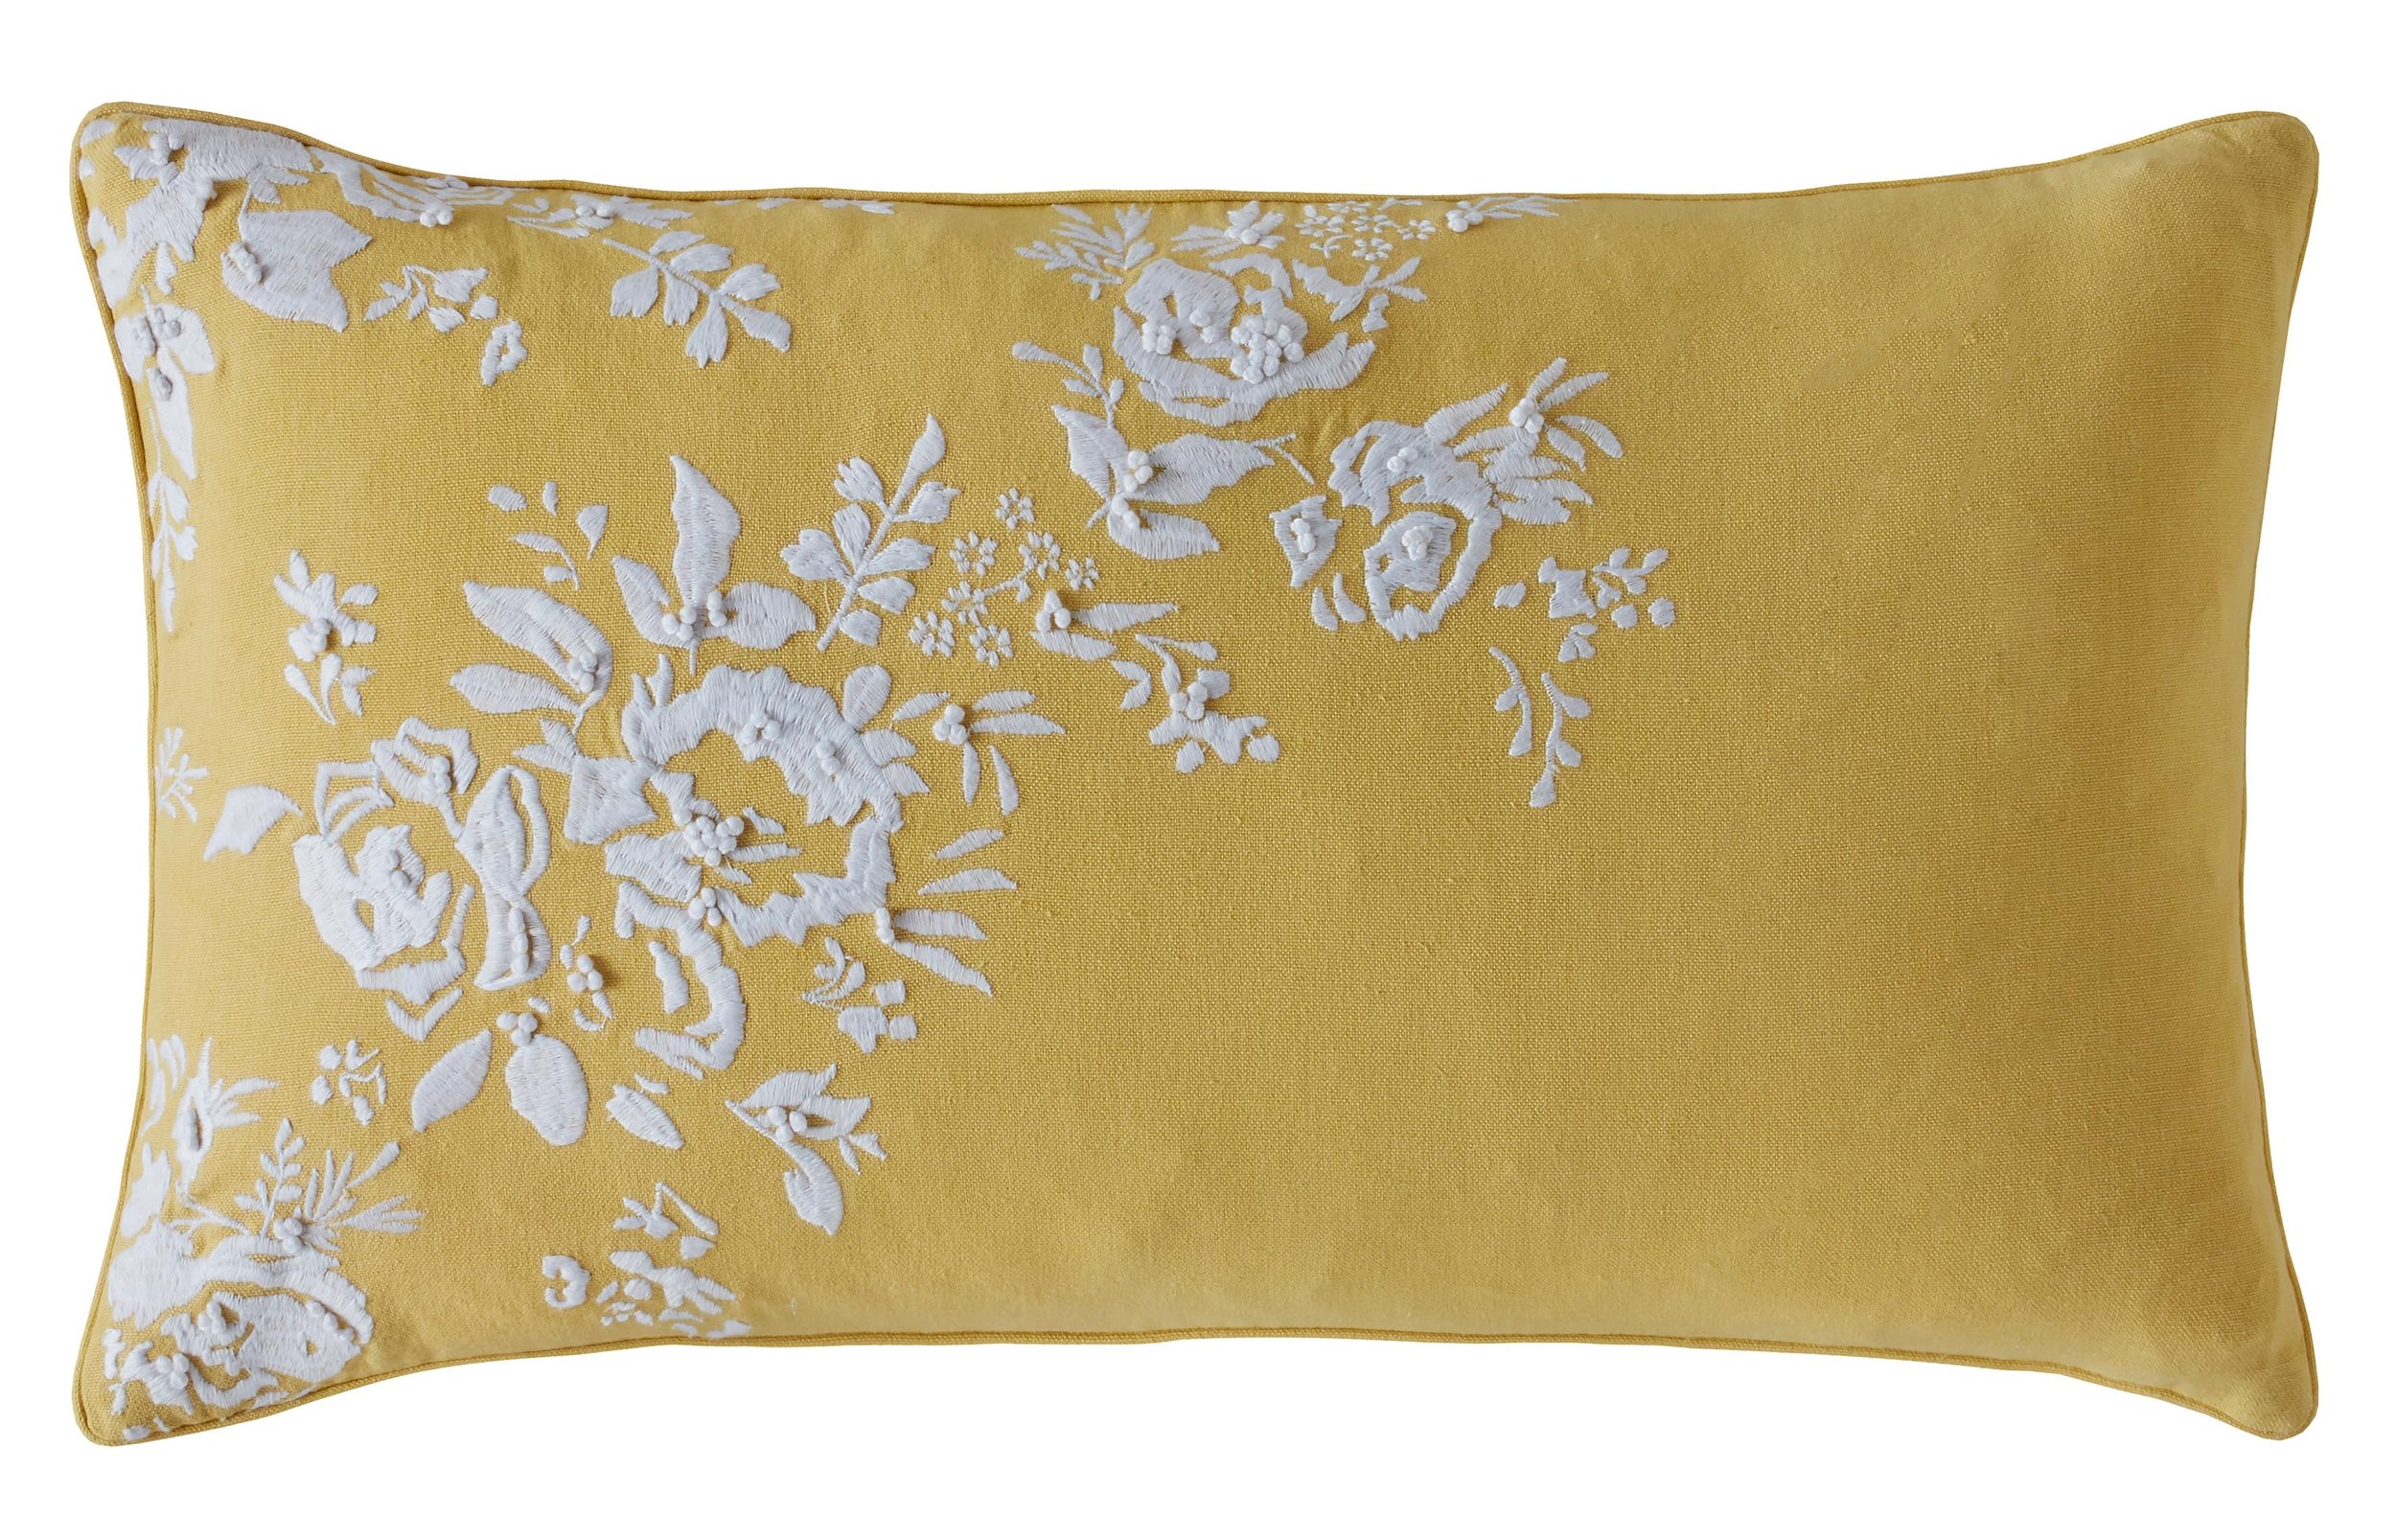 5.CATH KIDSON Vintage Bunch Yellow Cushion €39.91, 